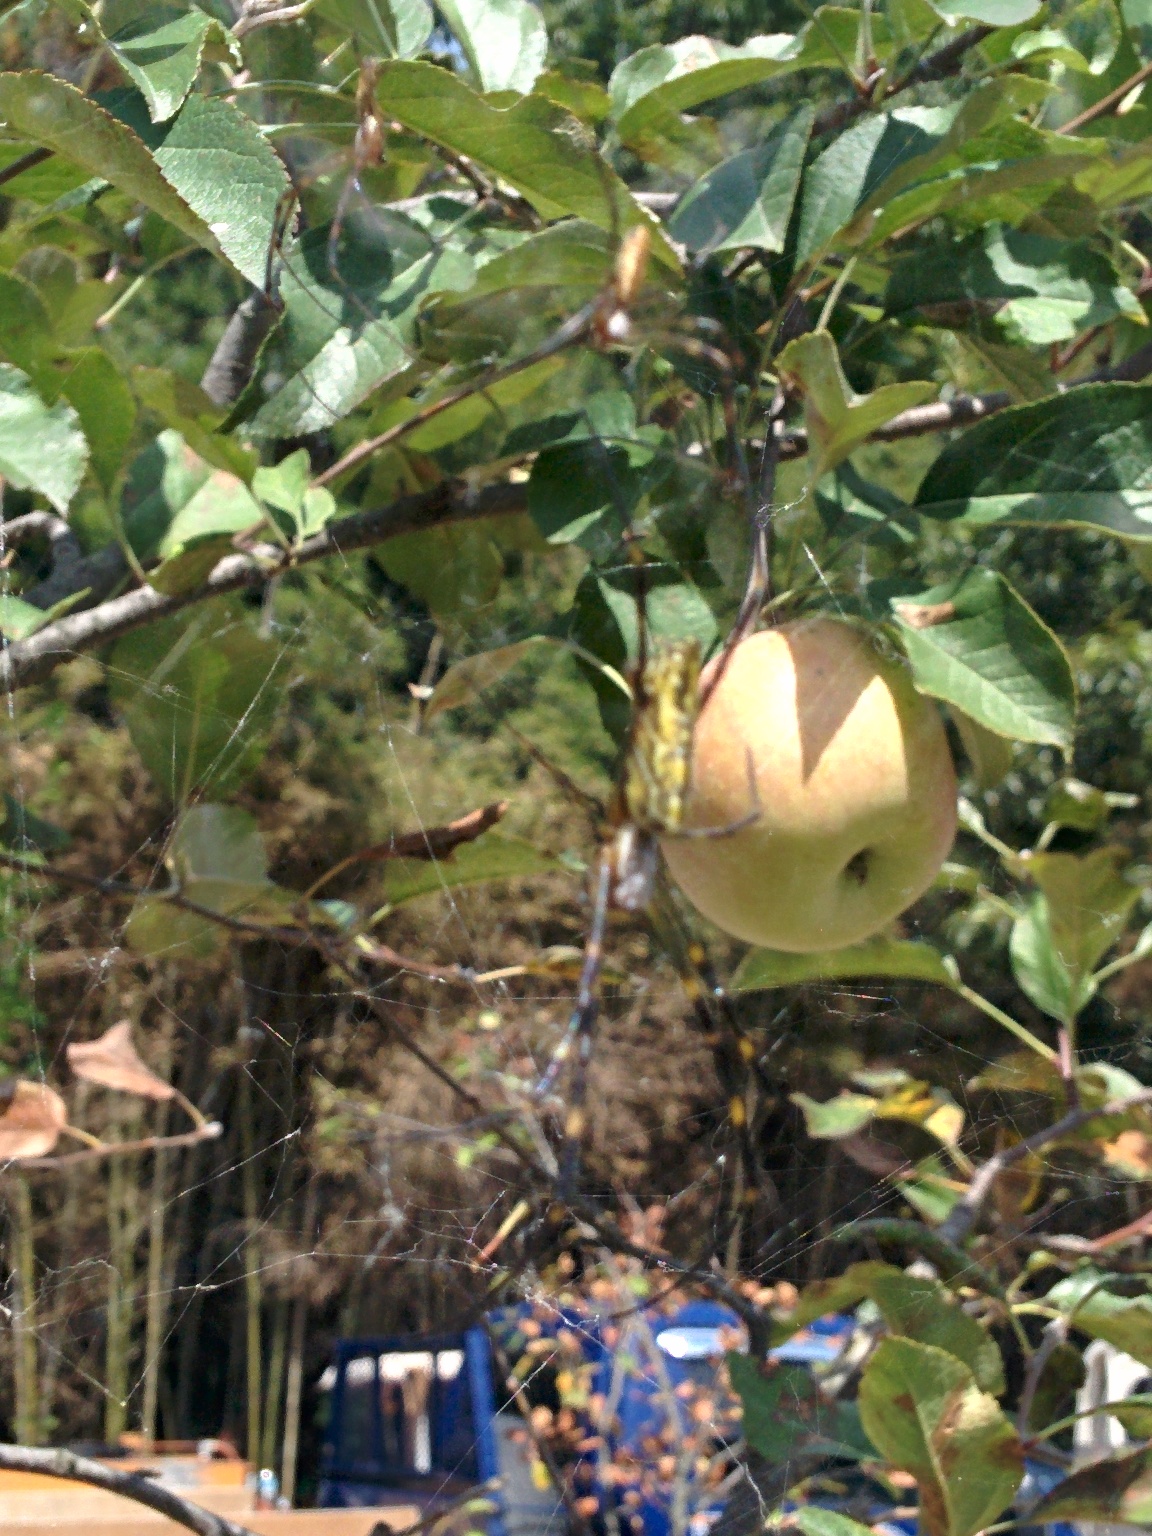 IMG_20150914_124228.jpg 사과나무에 둥지를 마련한 무당거미 (암컷 한마리, 수컷 두마리)